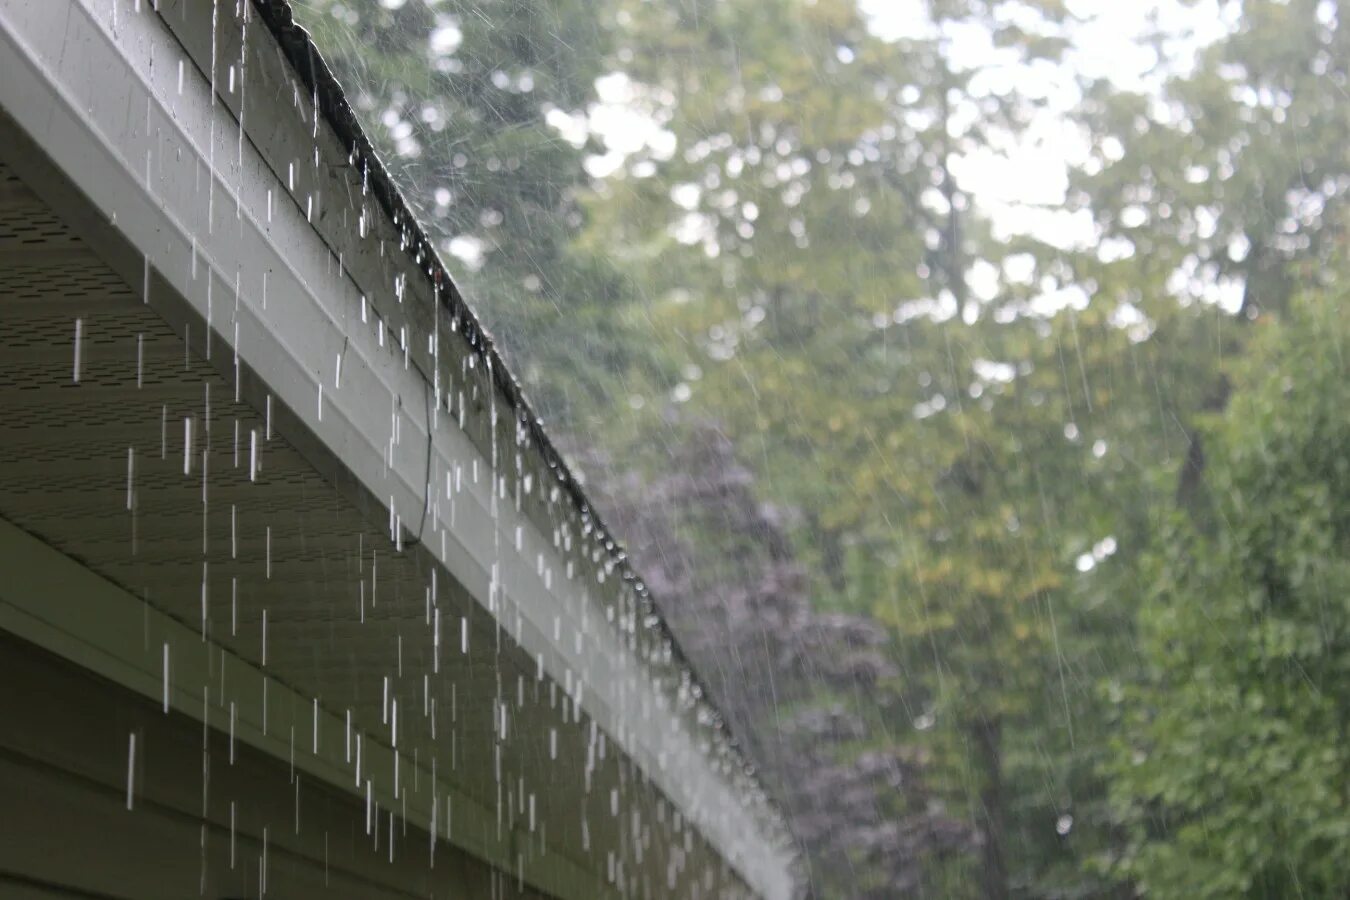 Rain damage. Дождь по крыше. Капли по крыше. Rain on the Roof.